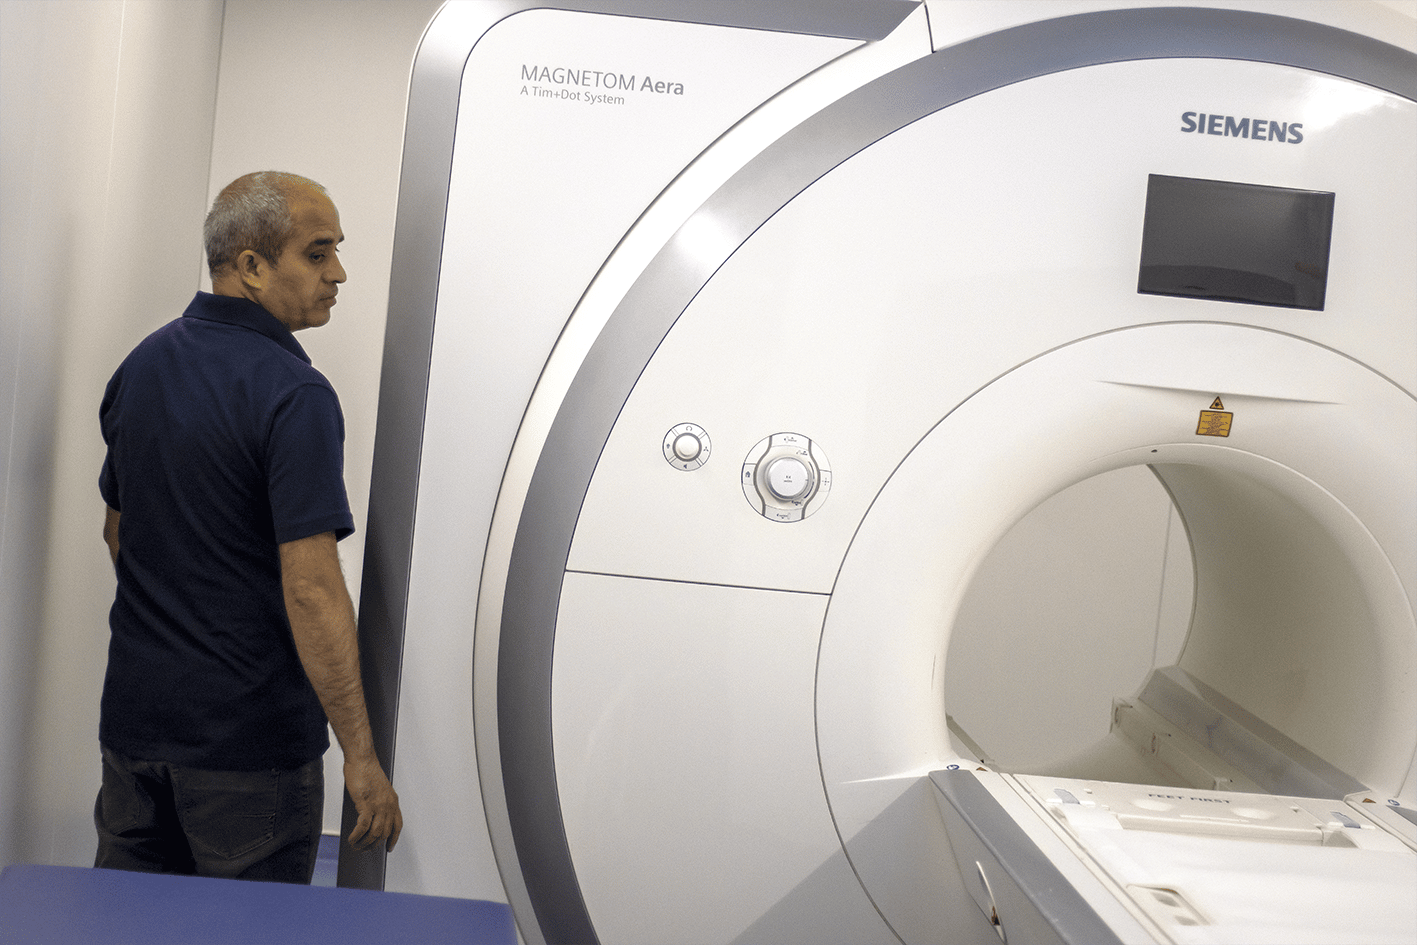 Siemens Magnetom Aera MRI